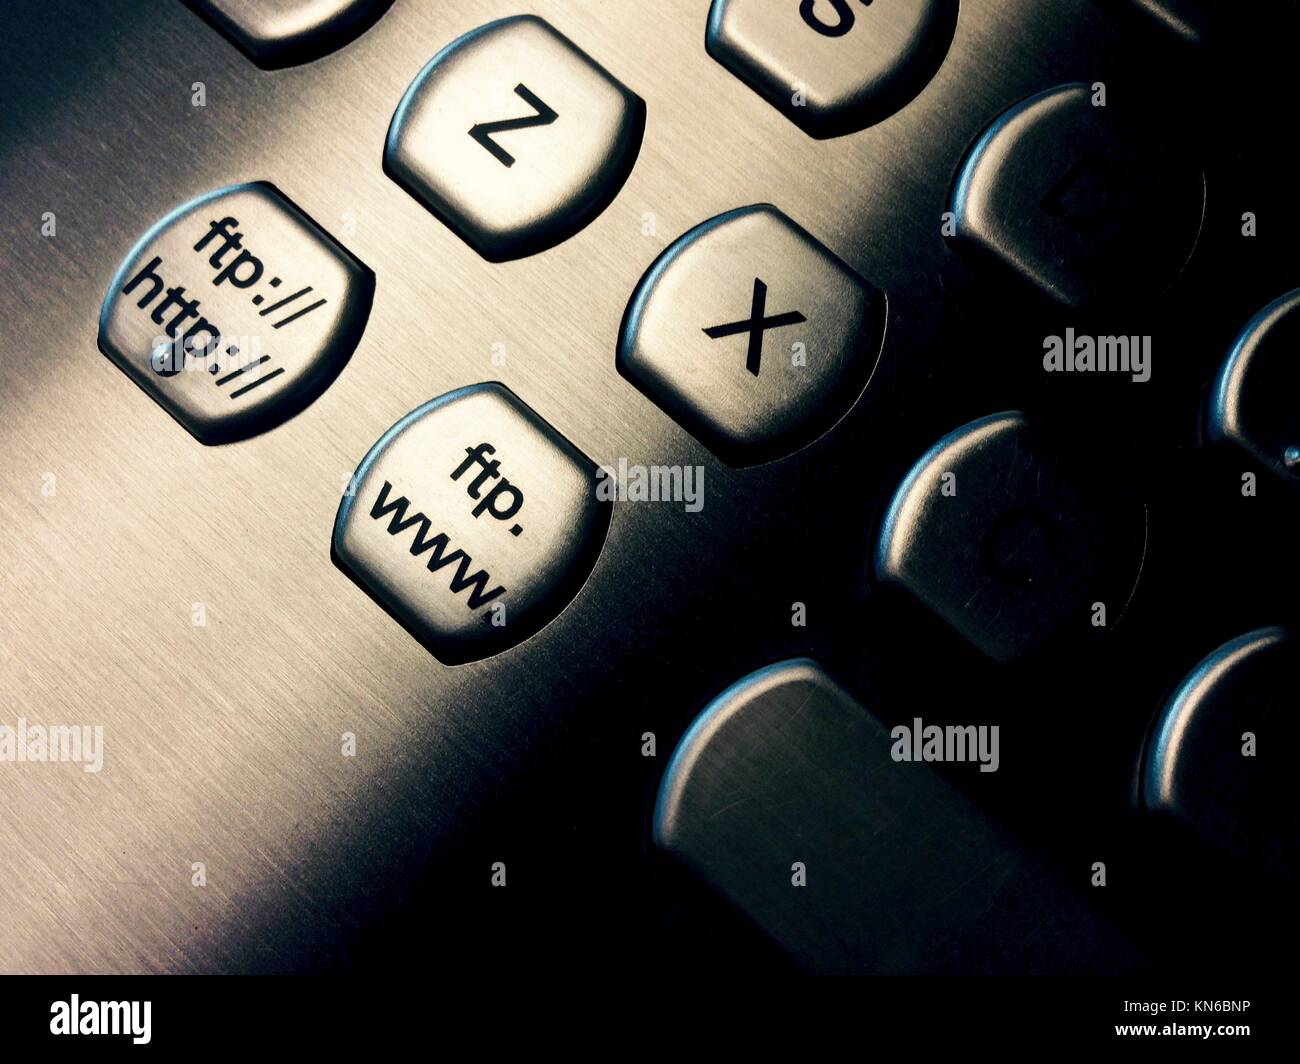 Aluminum pc keyboard closeup with ftp and web keys. Stock Photo